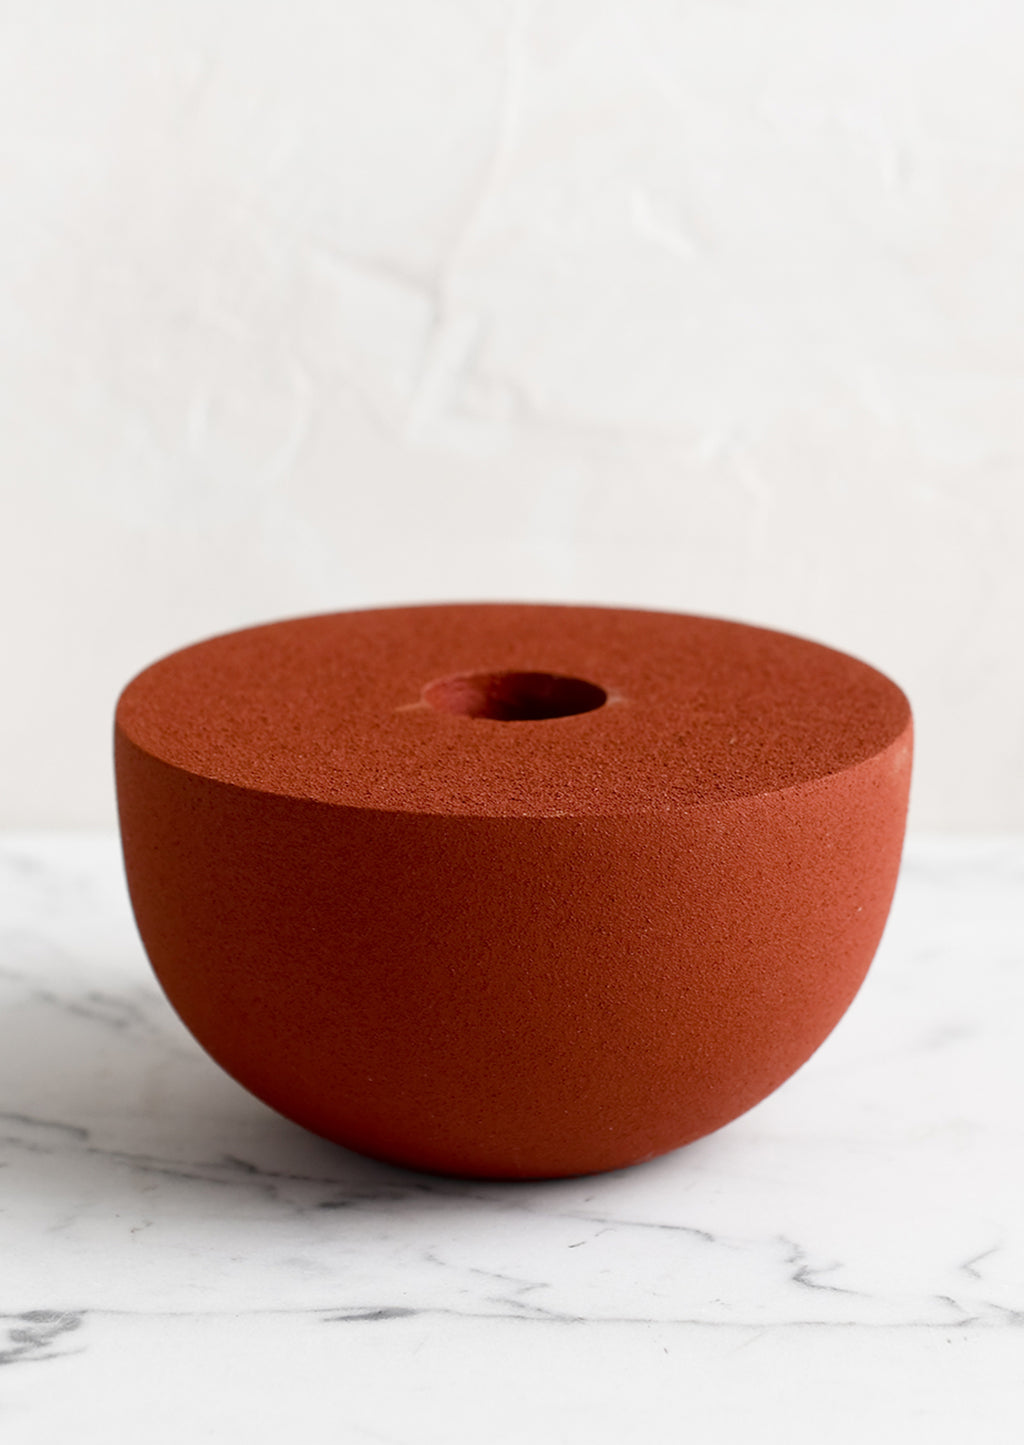 2: A red half-sphere taper holder in matte texture.